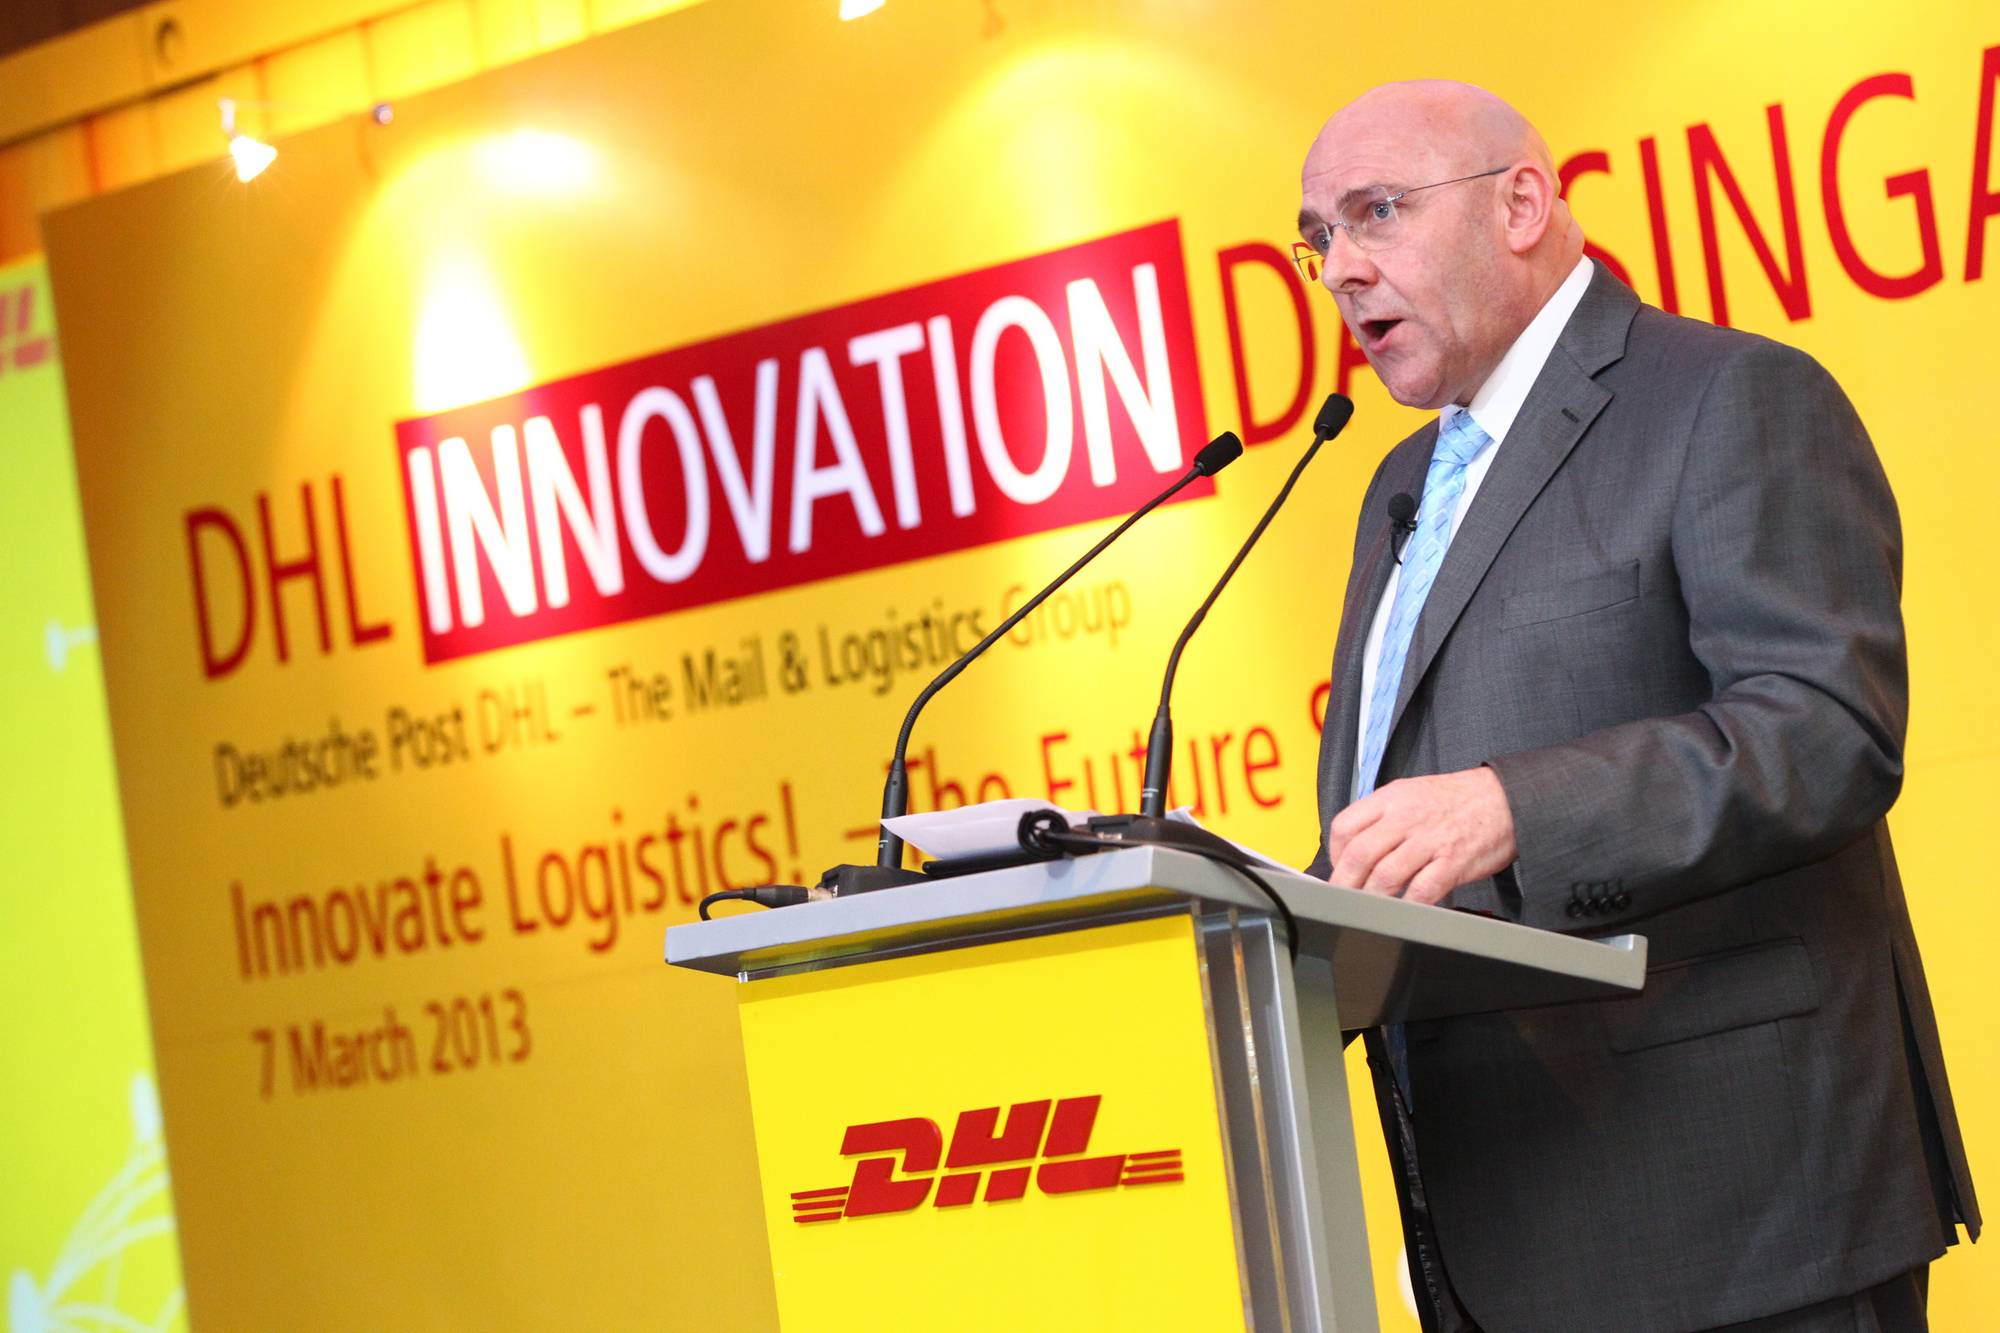 2013-03 SIN DHL Innovation Day@PanPacific (1).jpg